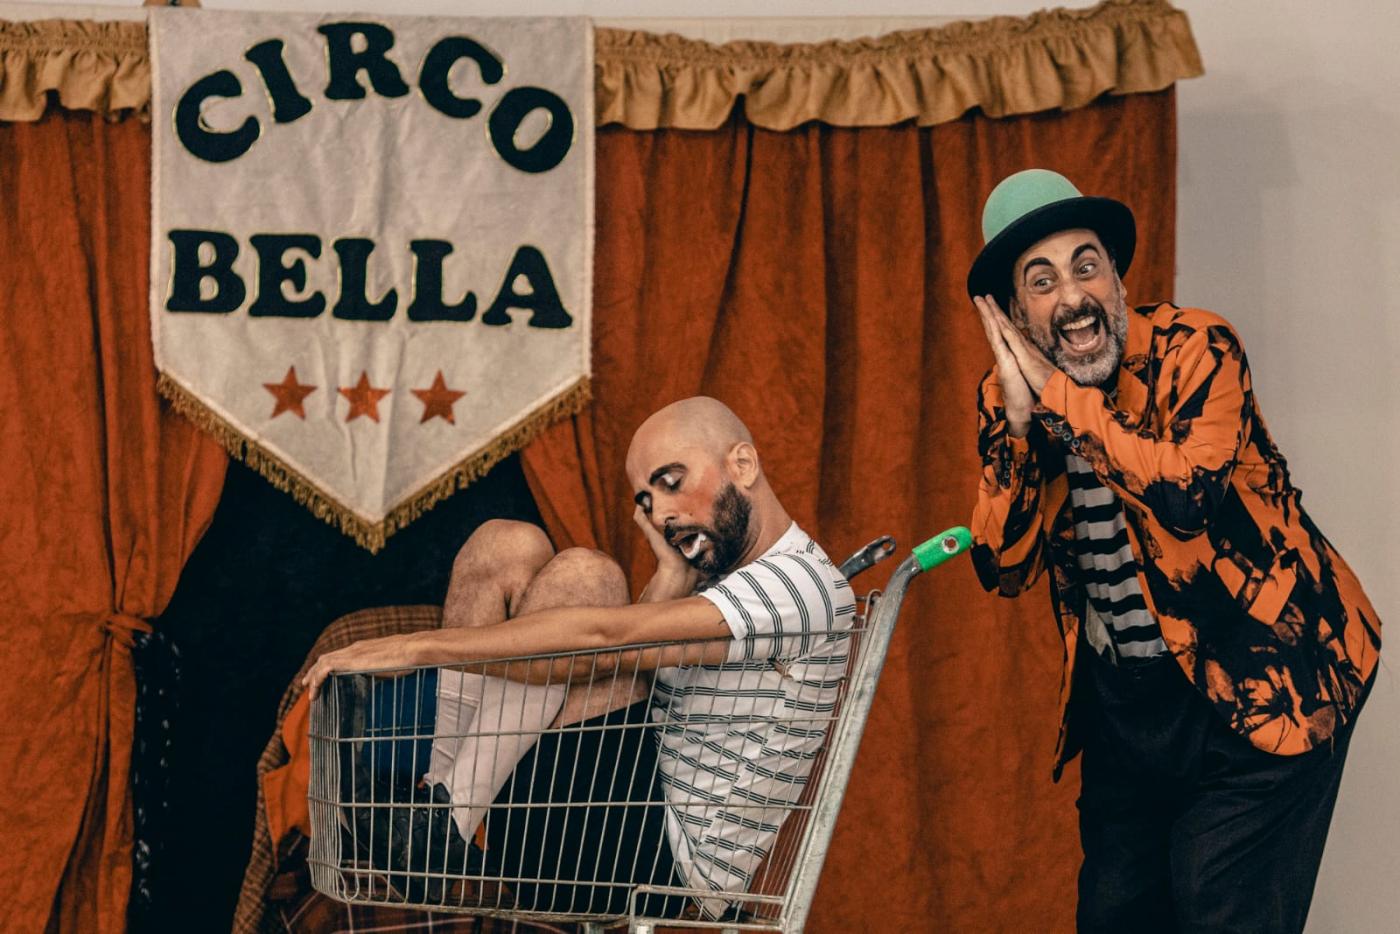 Magia do circo toma conta da Concha Acústica | Jornal da Orla